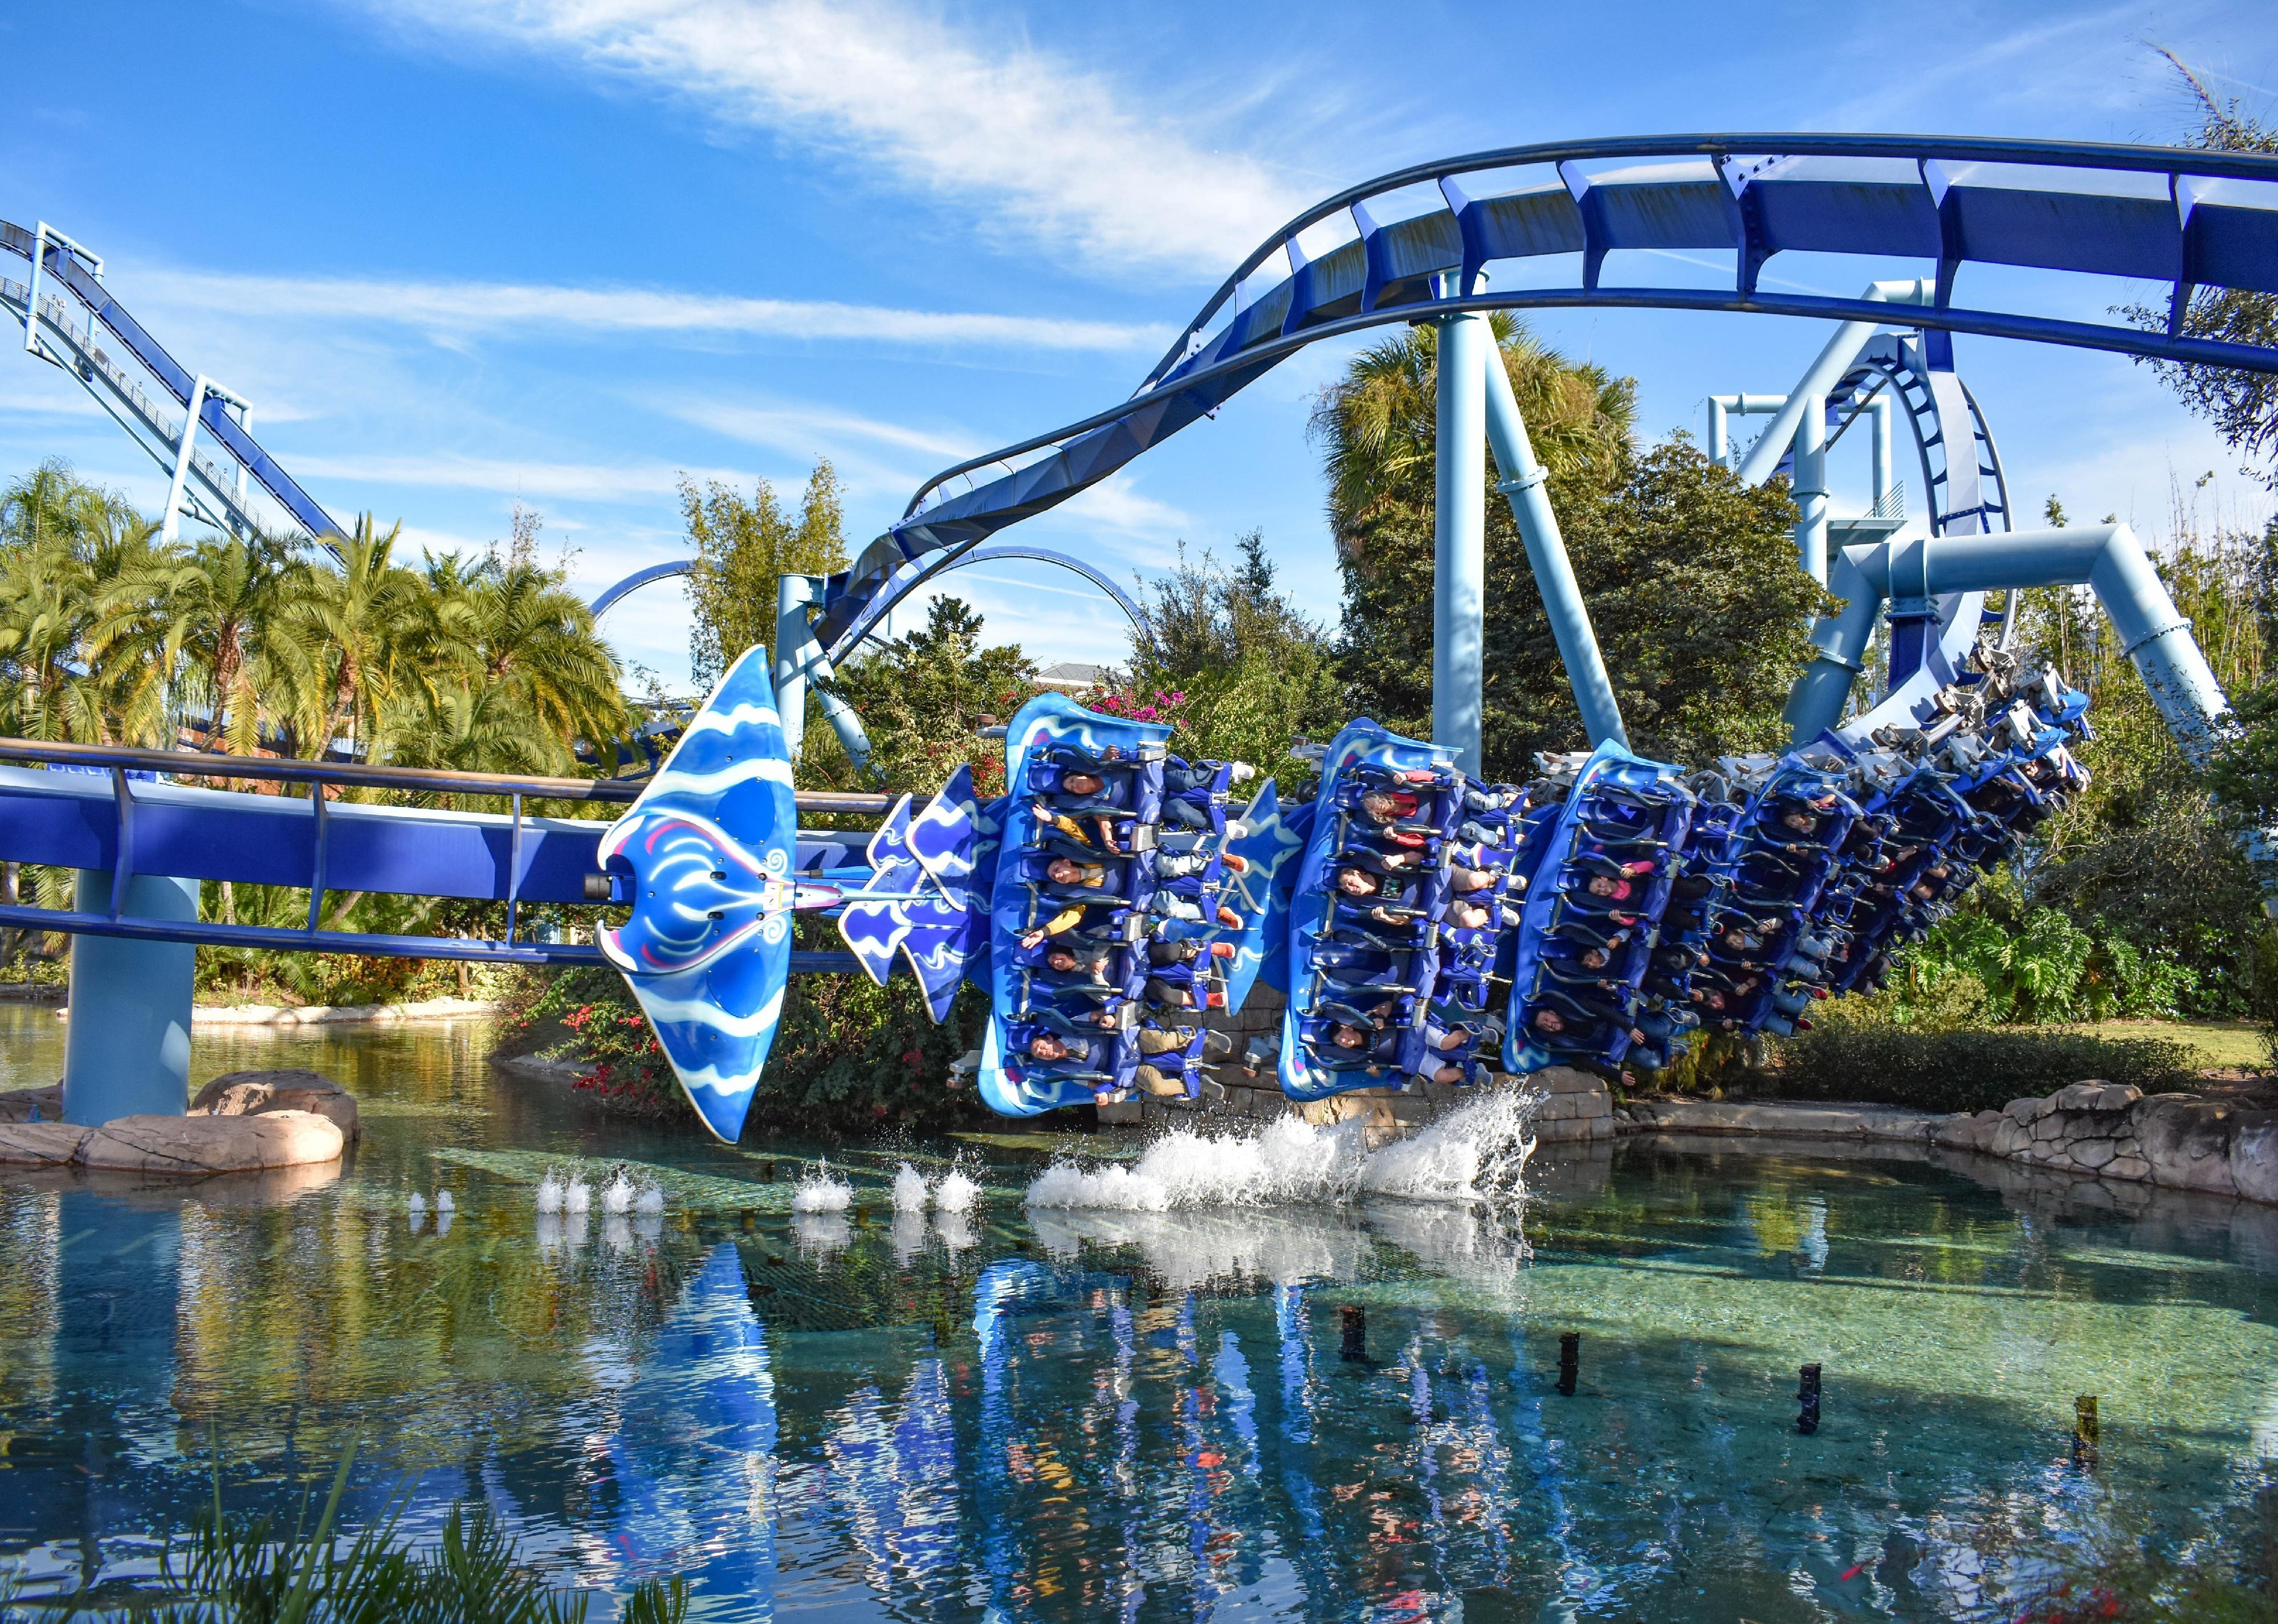 The Manta roller coaster at Sea World in Orlando.